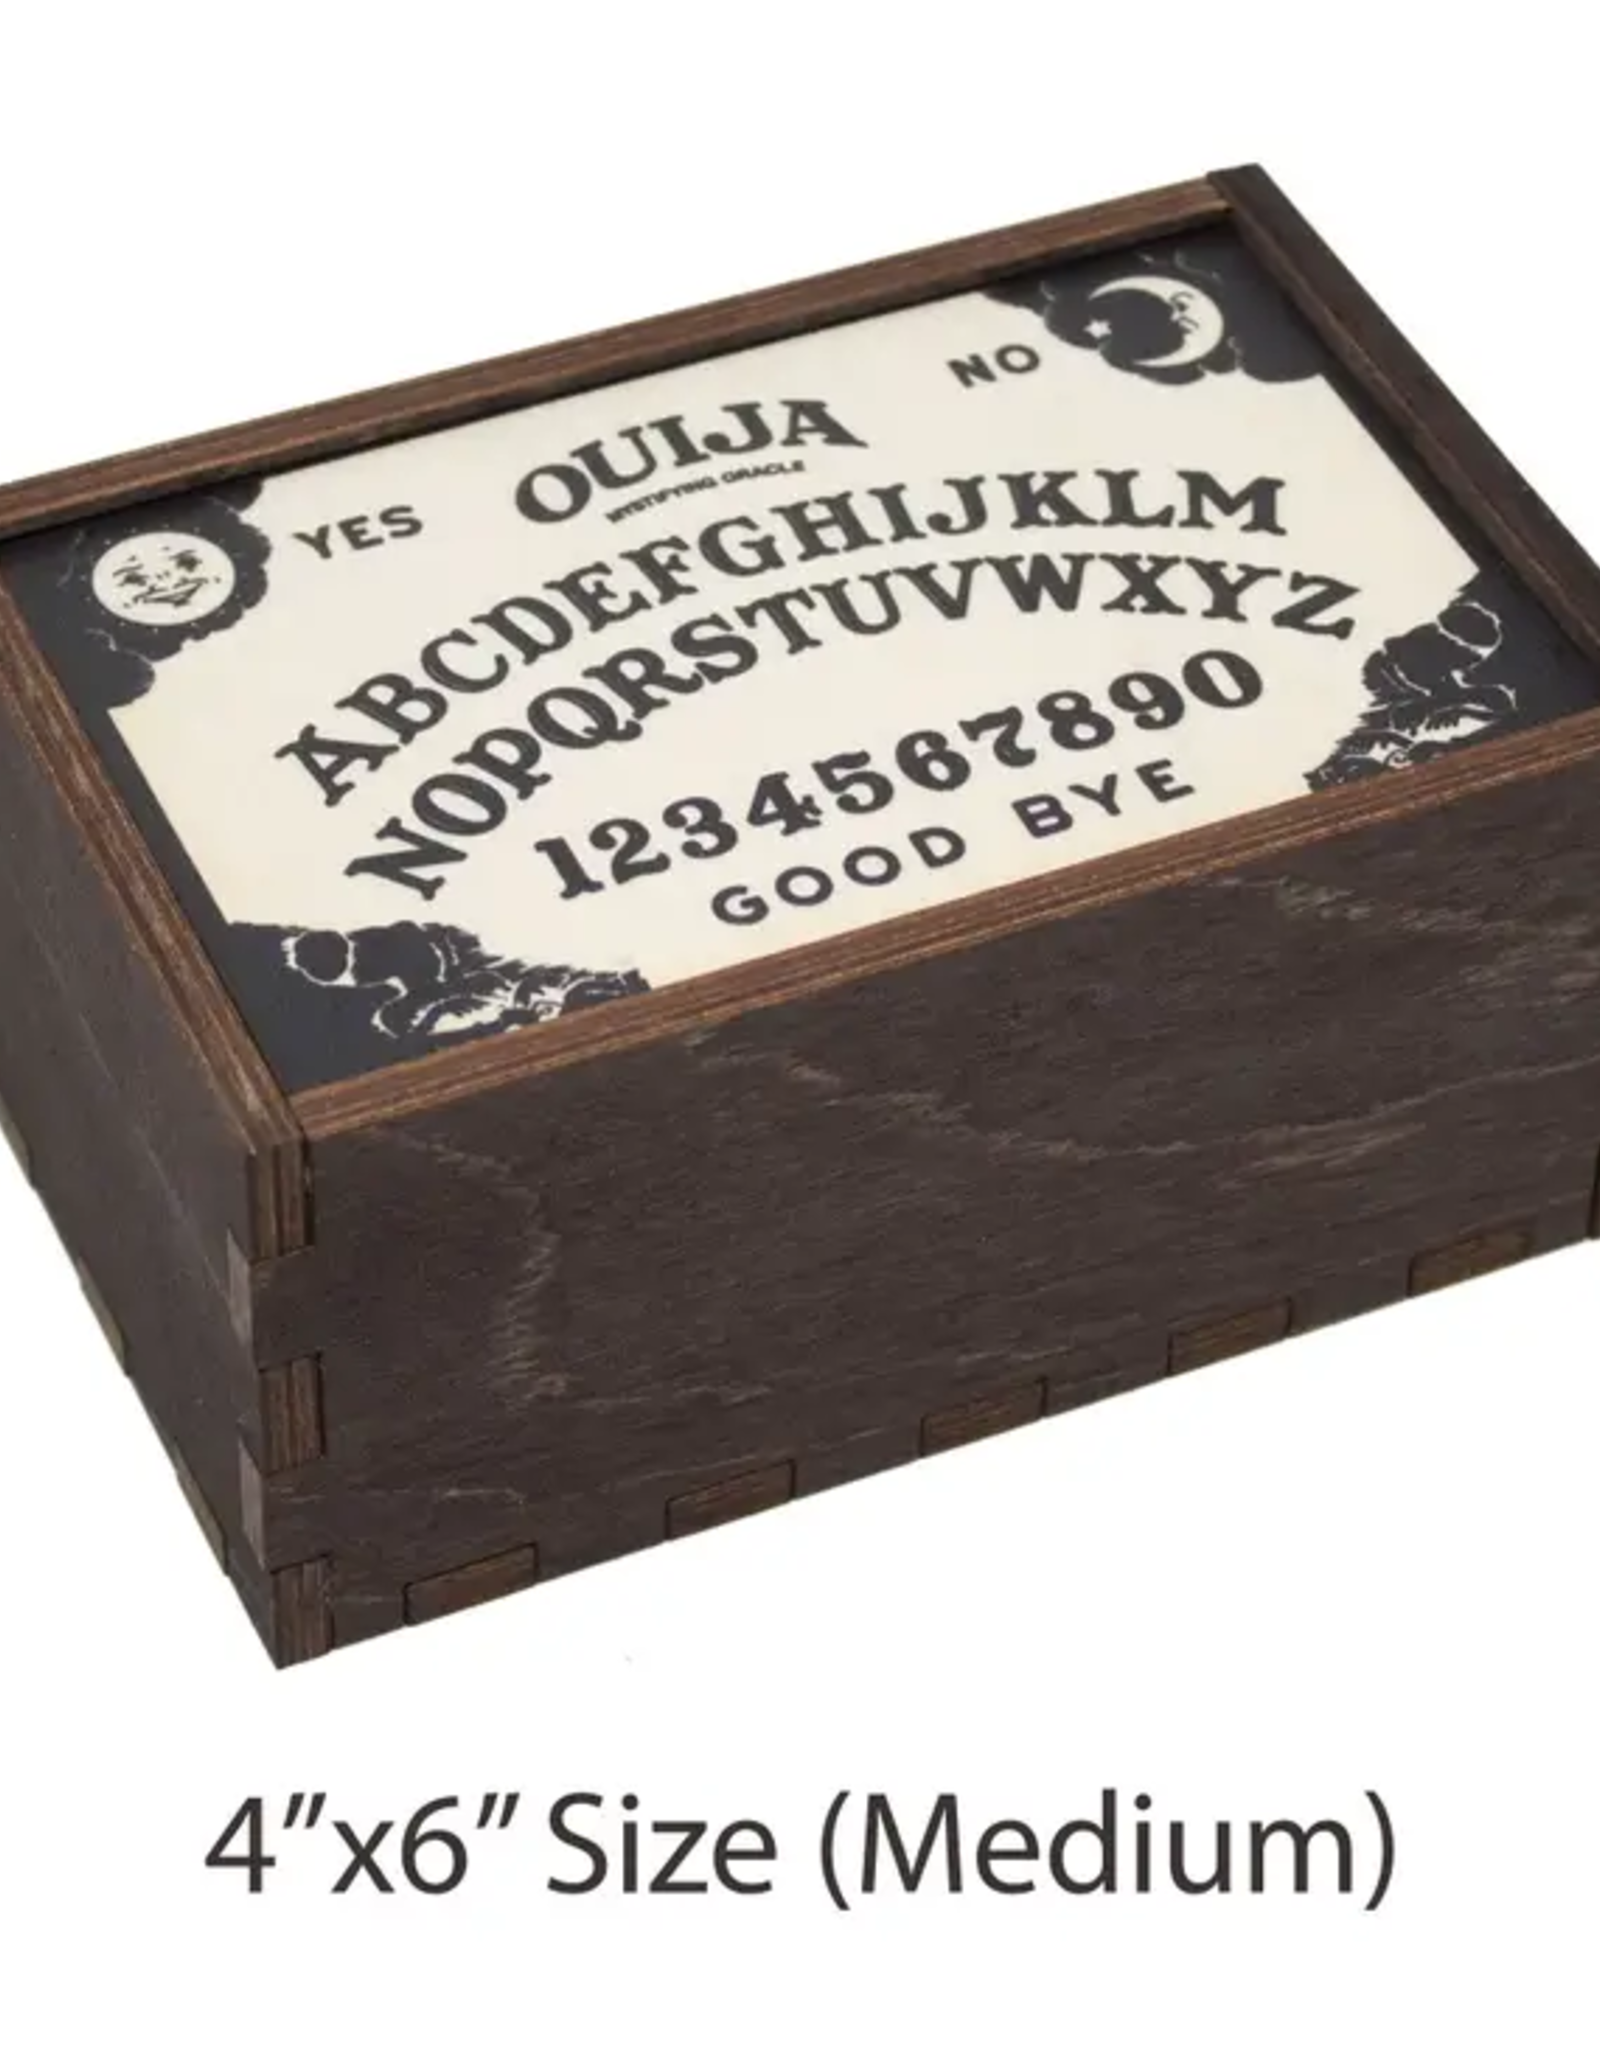 Most Amazing Ouija Board Full Color Tarot Card Box: 4"x6"